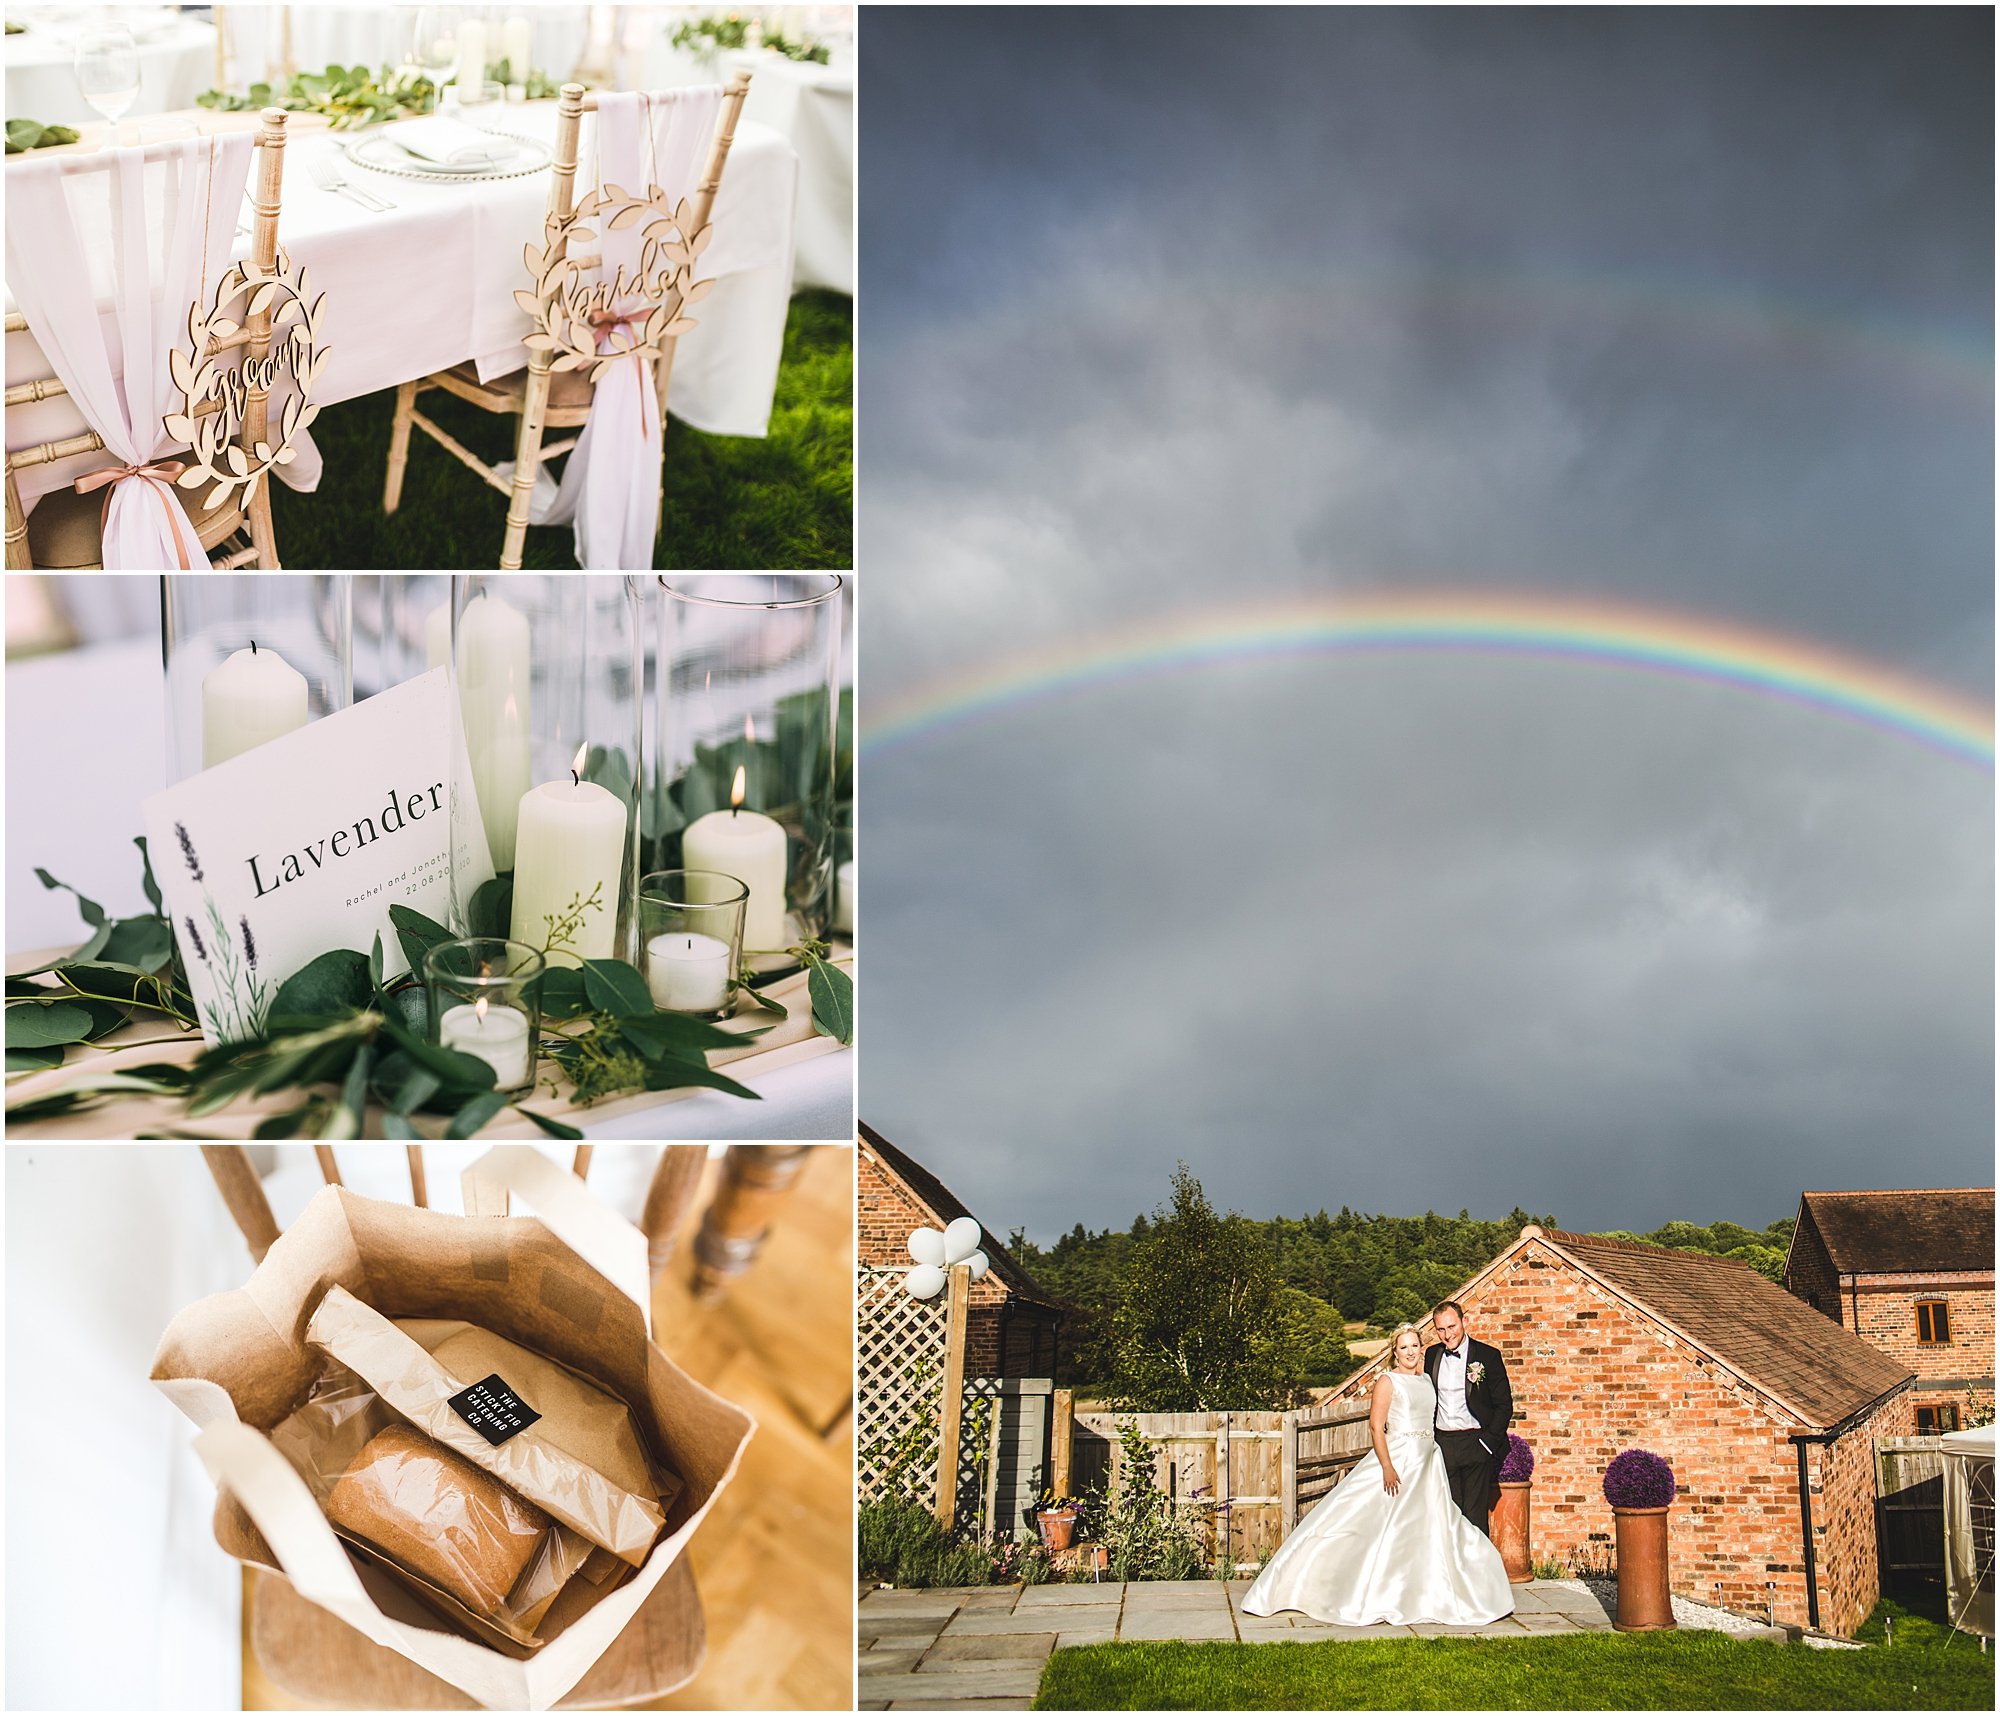 Collage of wedding venue photographs